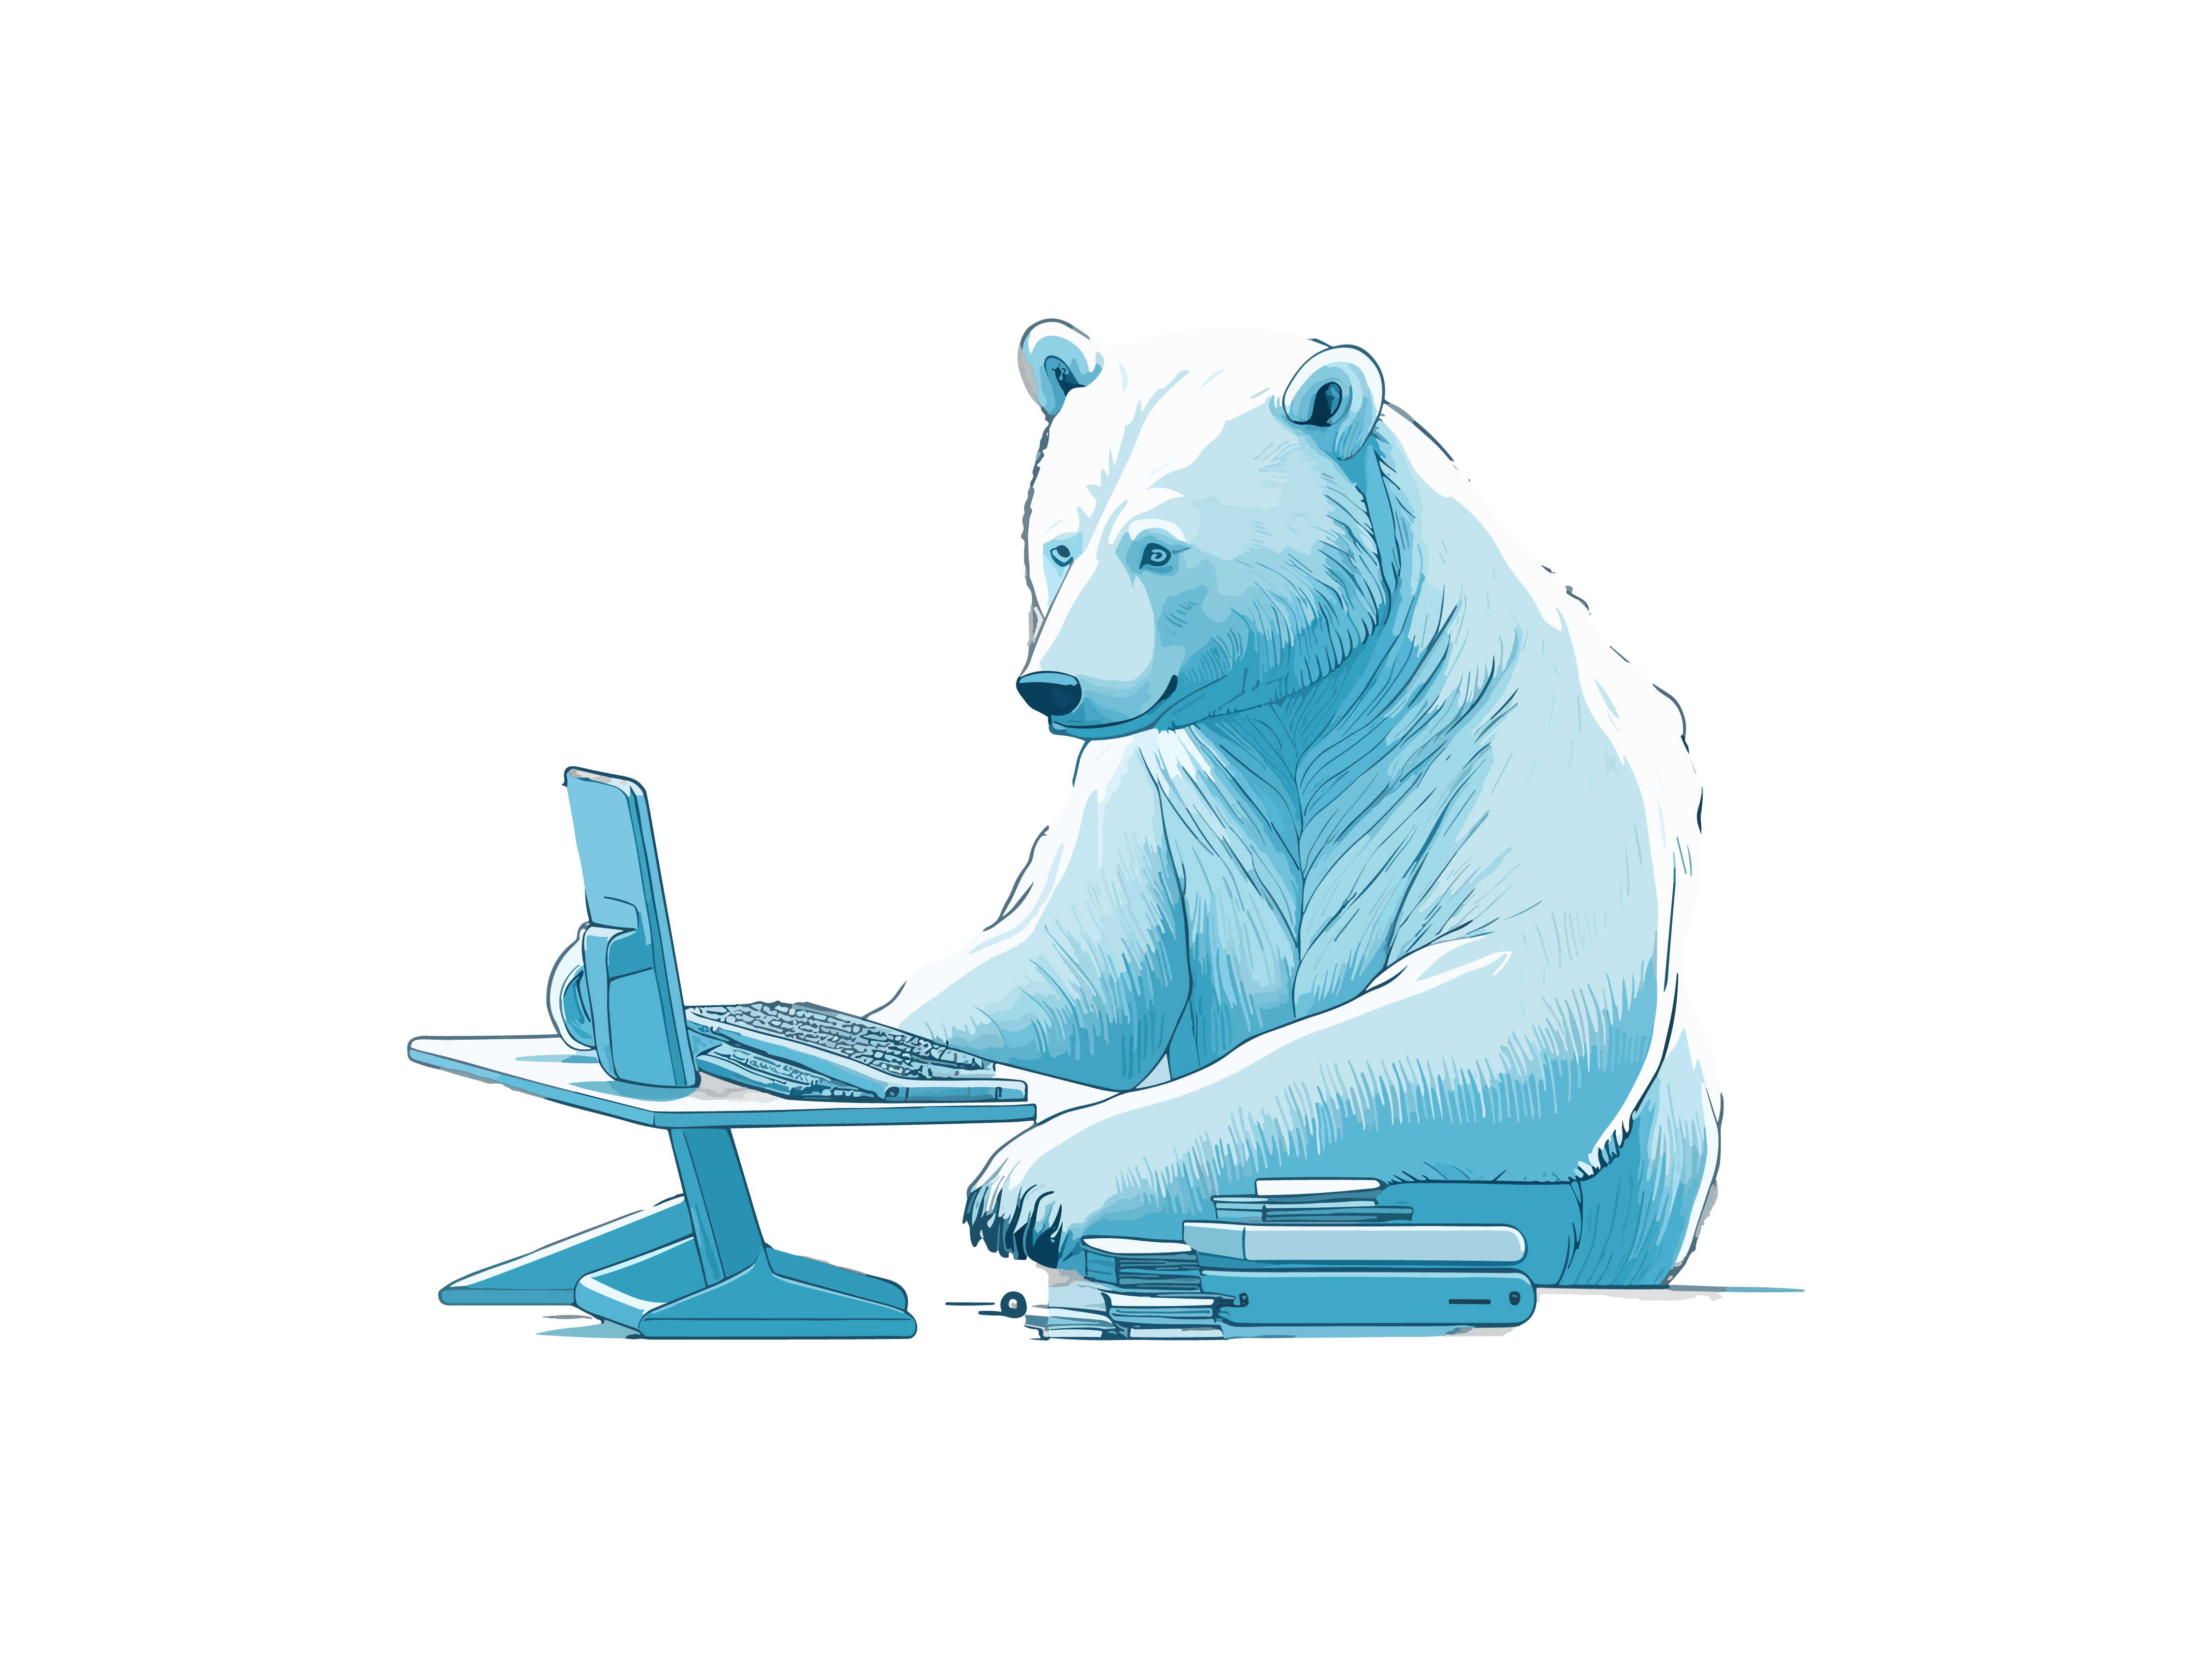 bear-polar-beer-finance-business-laptop-desk-illustration